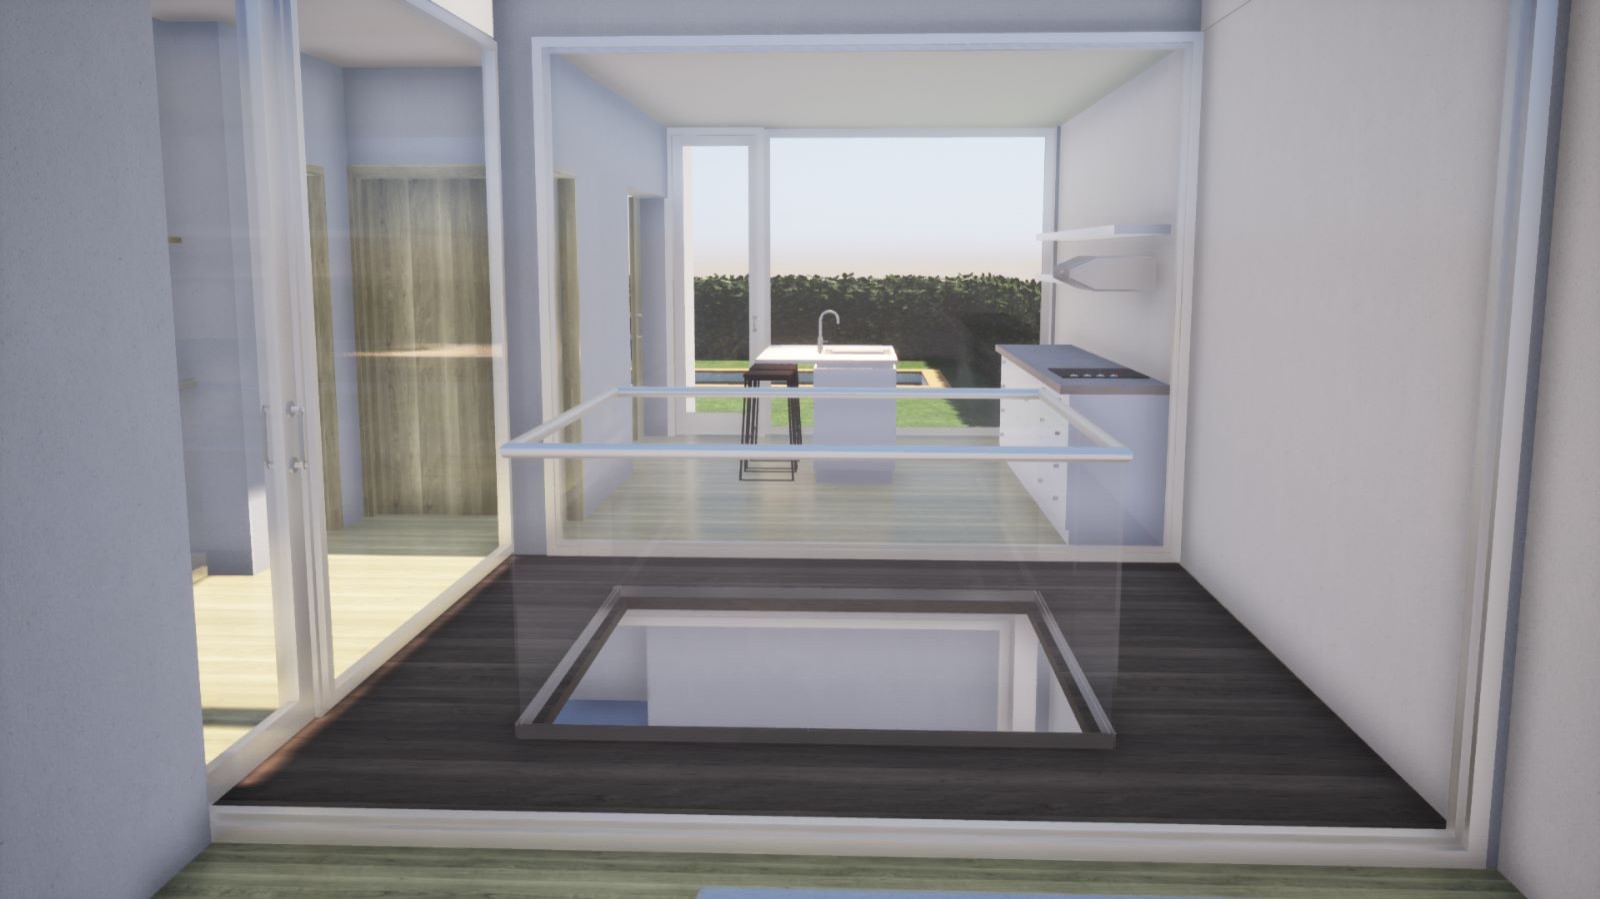 4 bedroom villa, new construction with seaview, for sale in Tavira, Algarve_227985